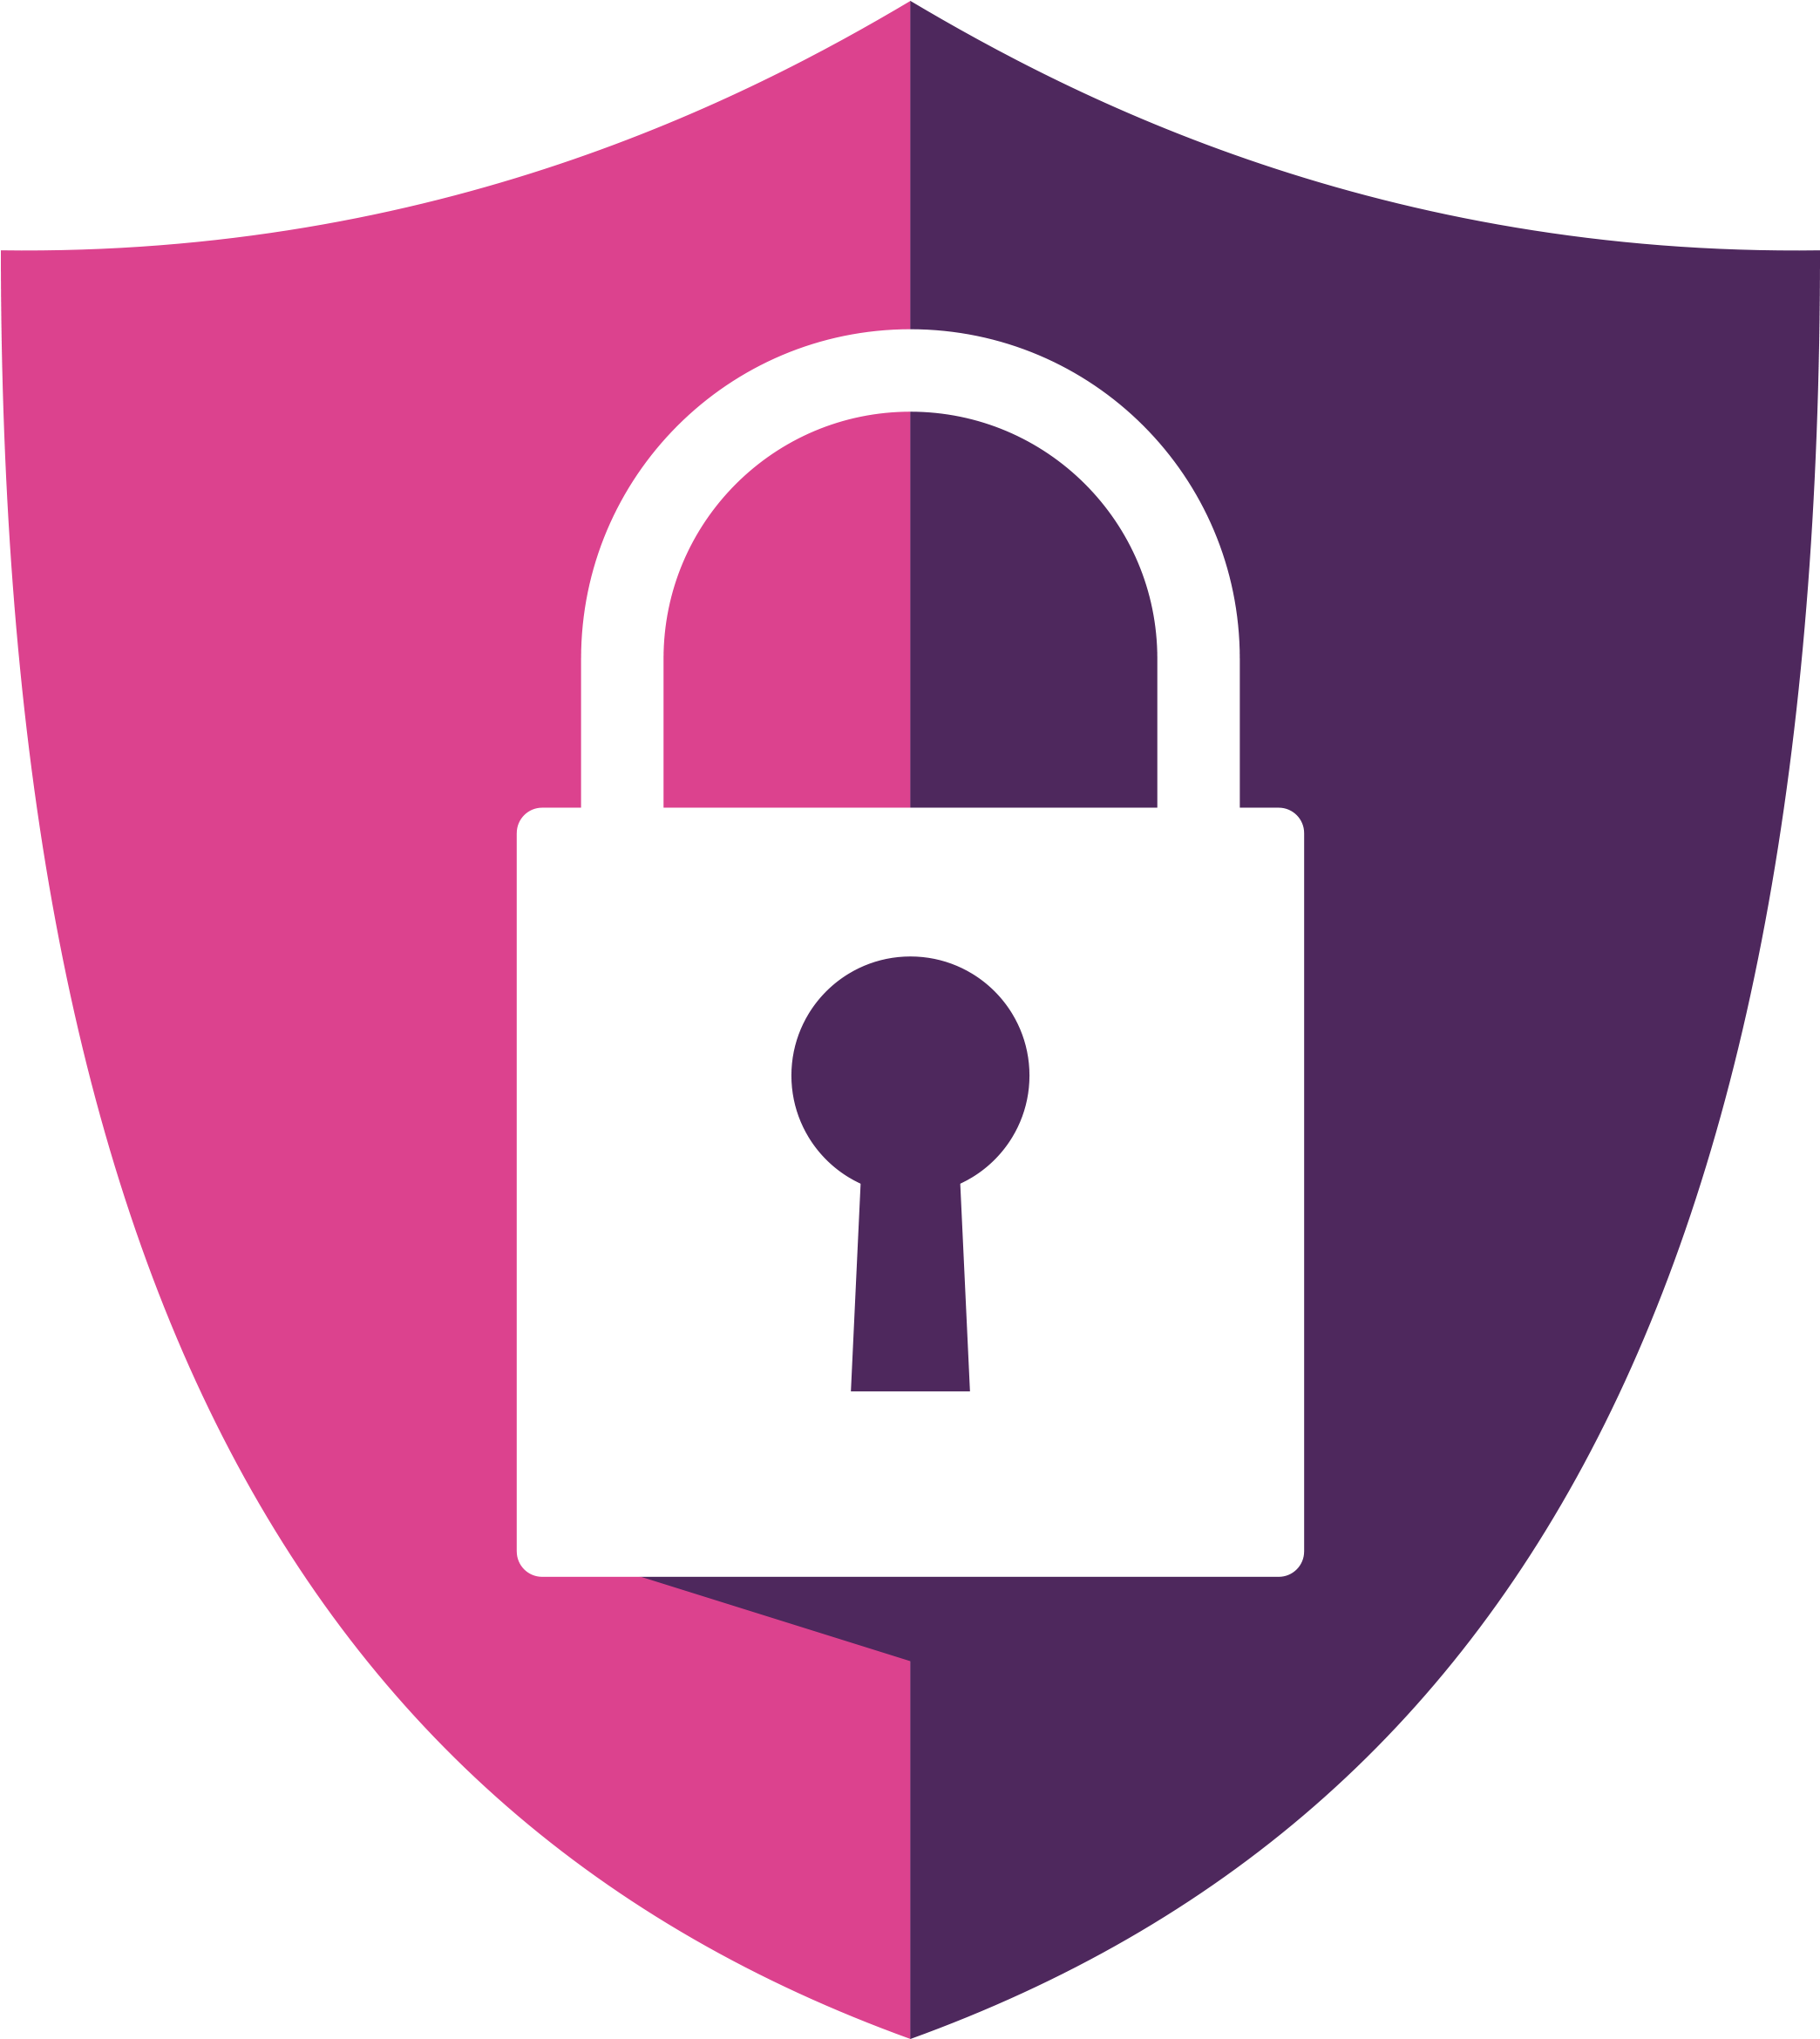 security logo png